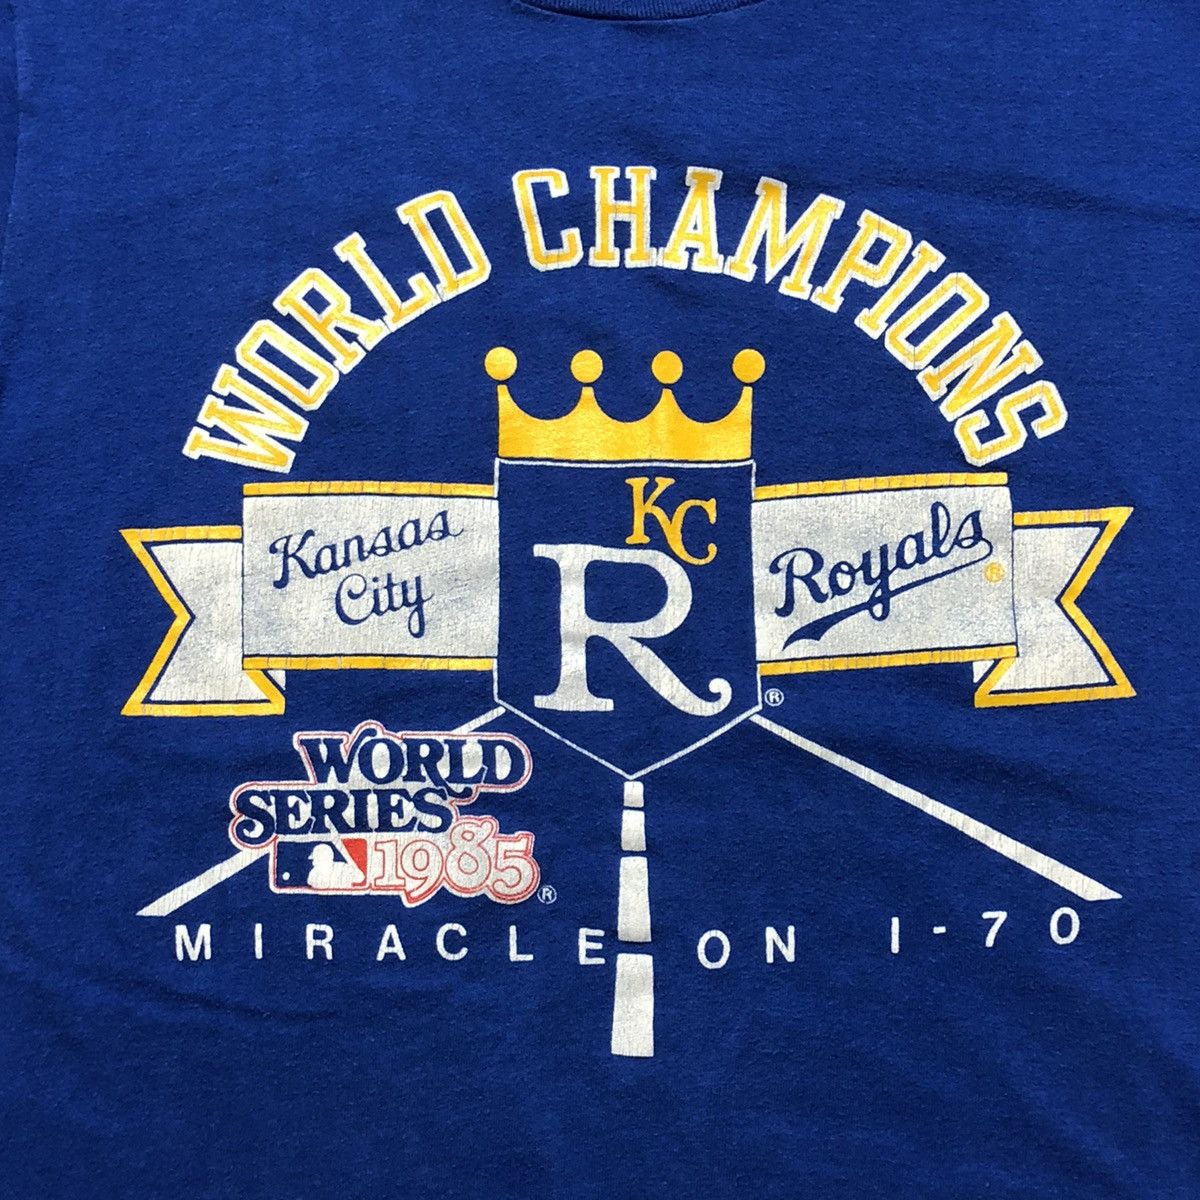 Vintage VTG 1985 Kansas City Royals World Series Champions Tee Small Size US S / EU 44-46 / 1 - 2 Preview